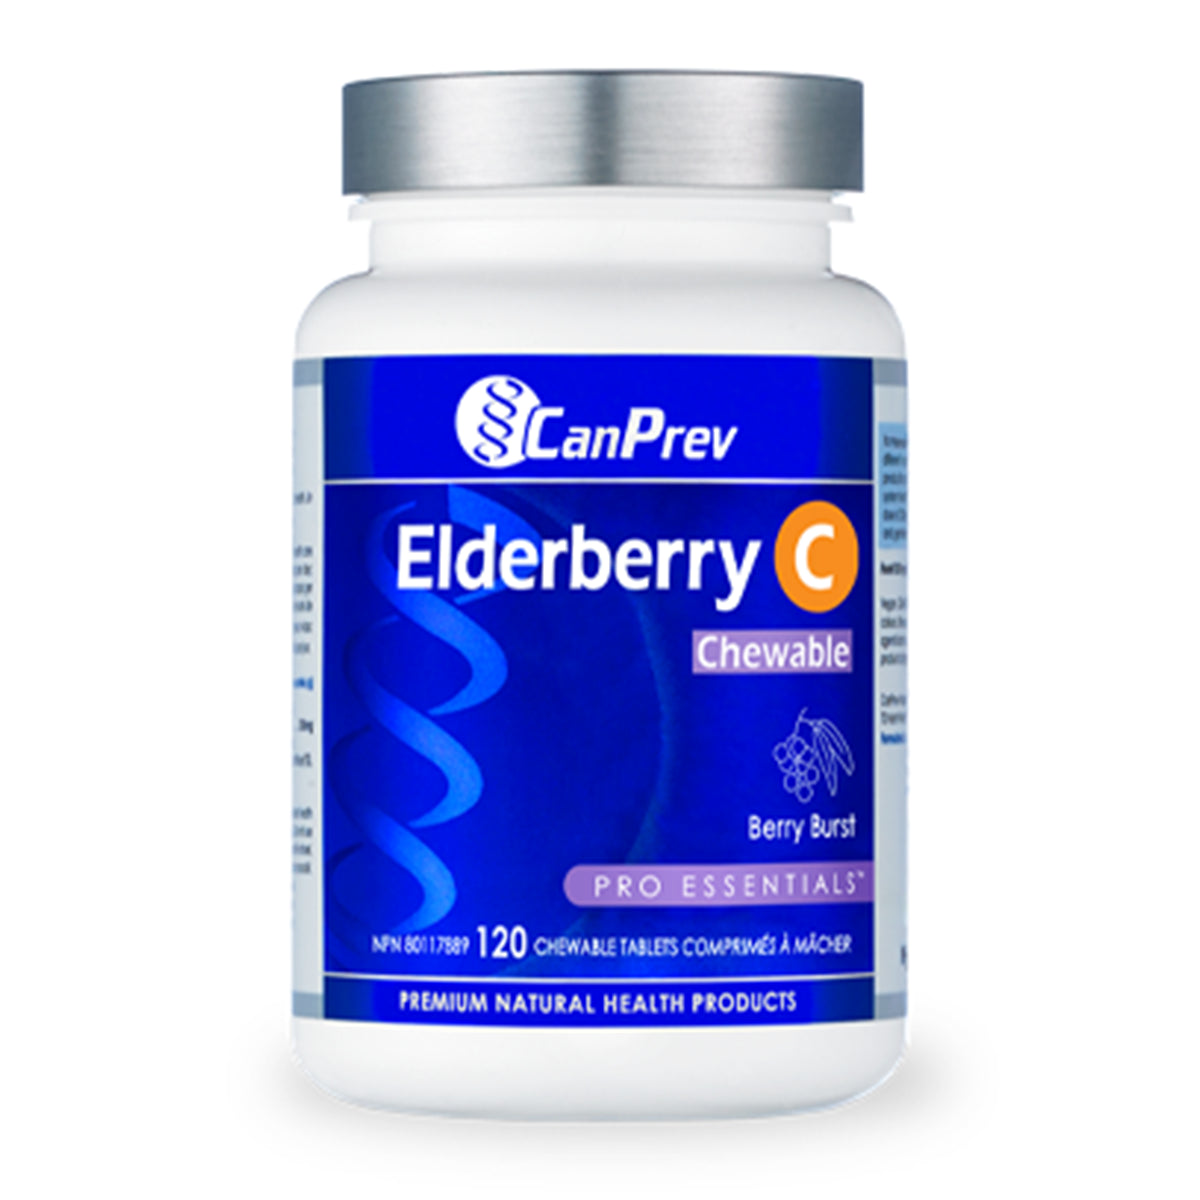 Elderberry C Chewable - Berry Burst 120 tab